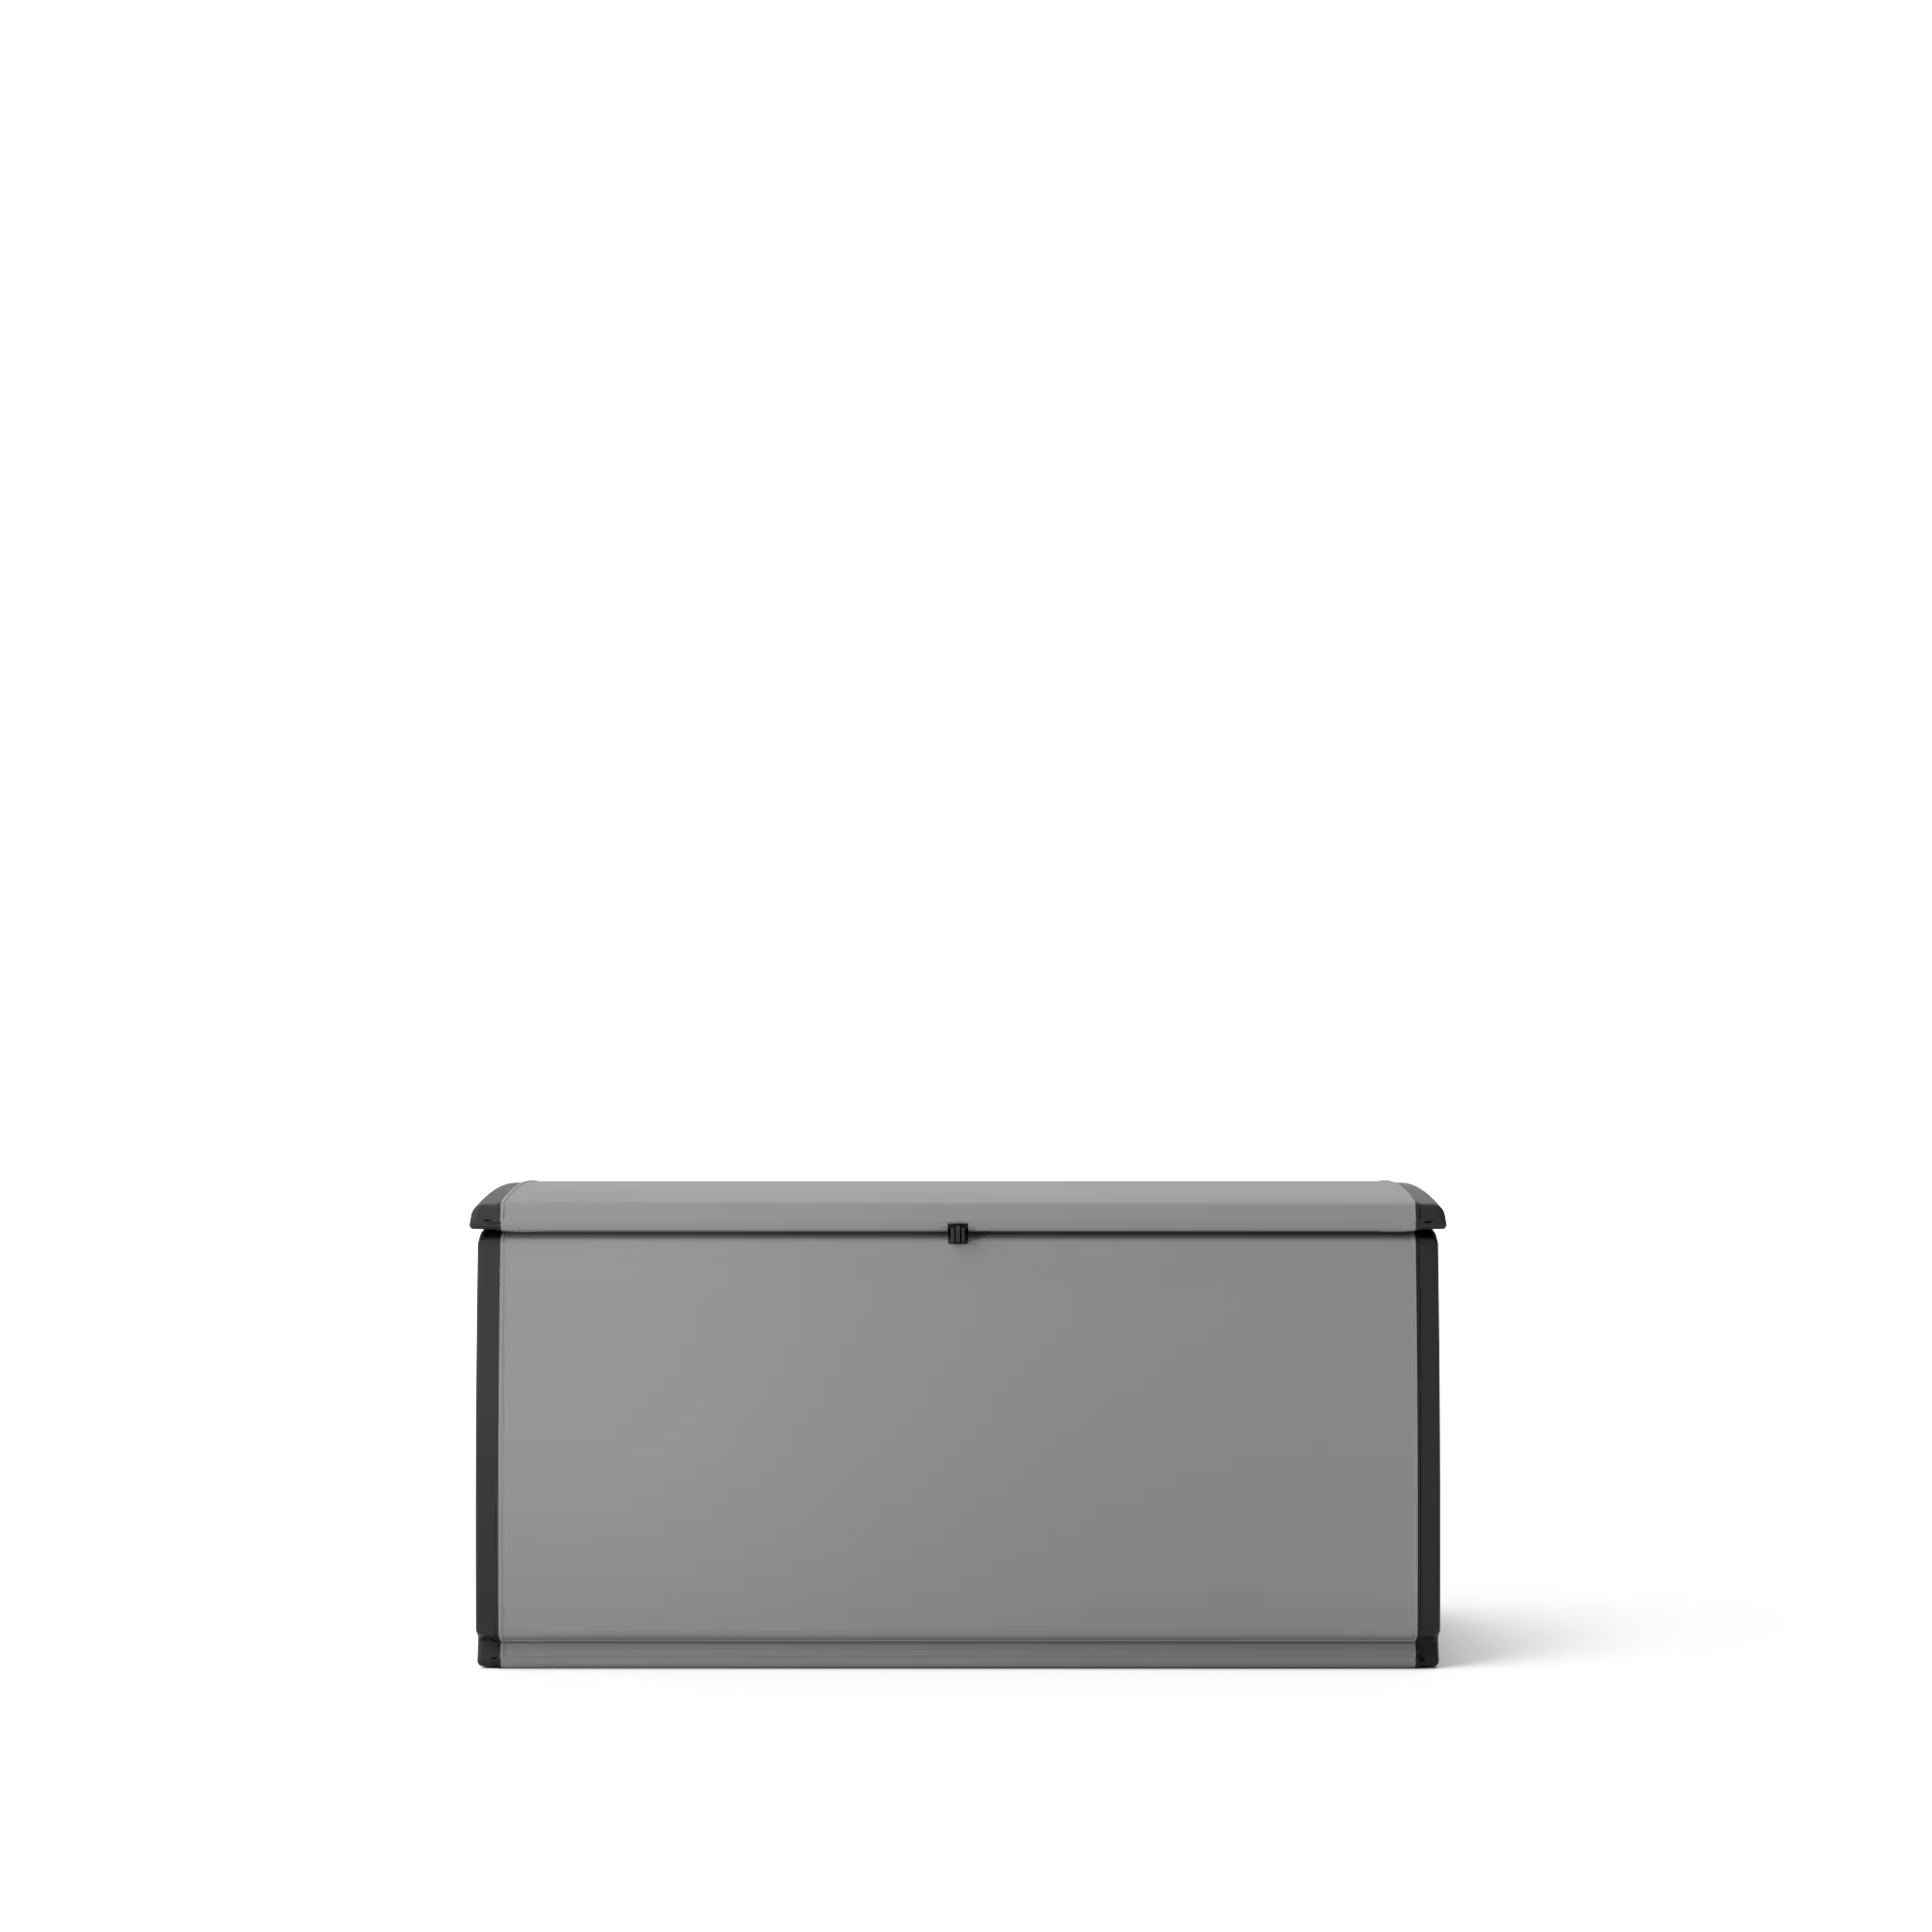 Baúl de resina de 57x120x54 cm y capacidad de 308l